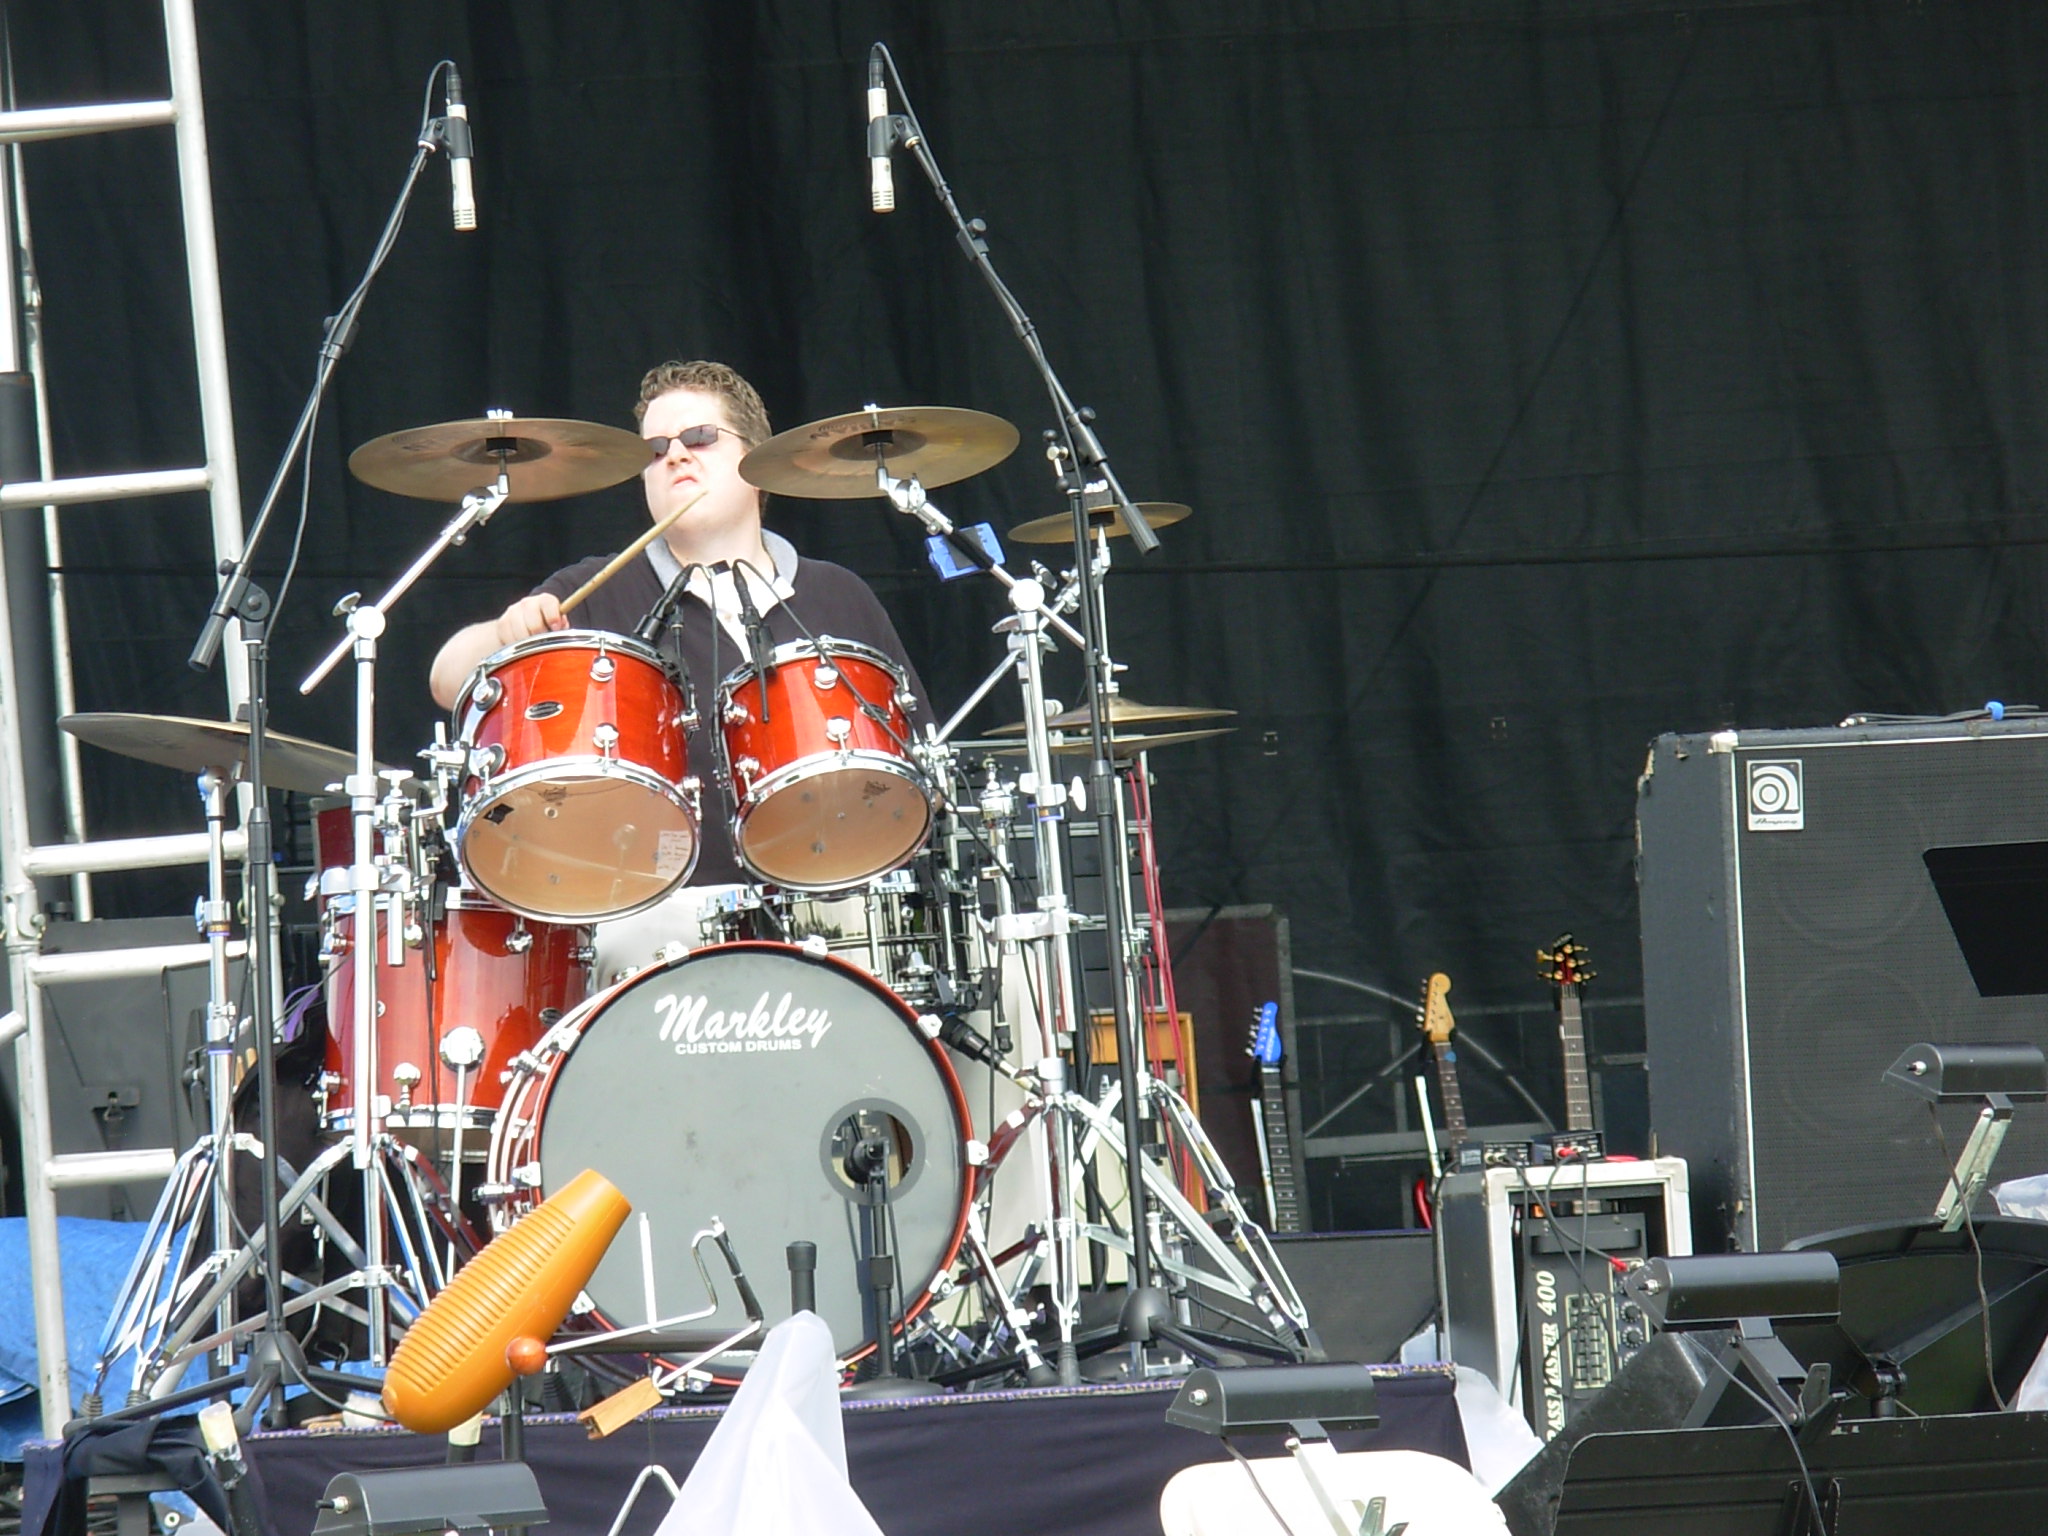 Joe Brye banging on the drums...
